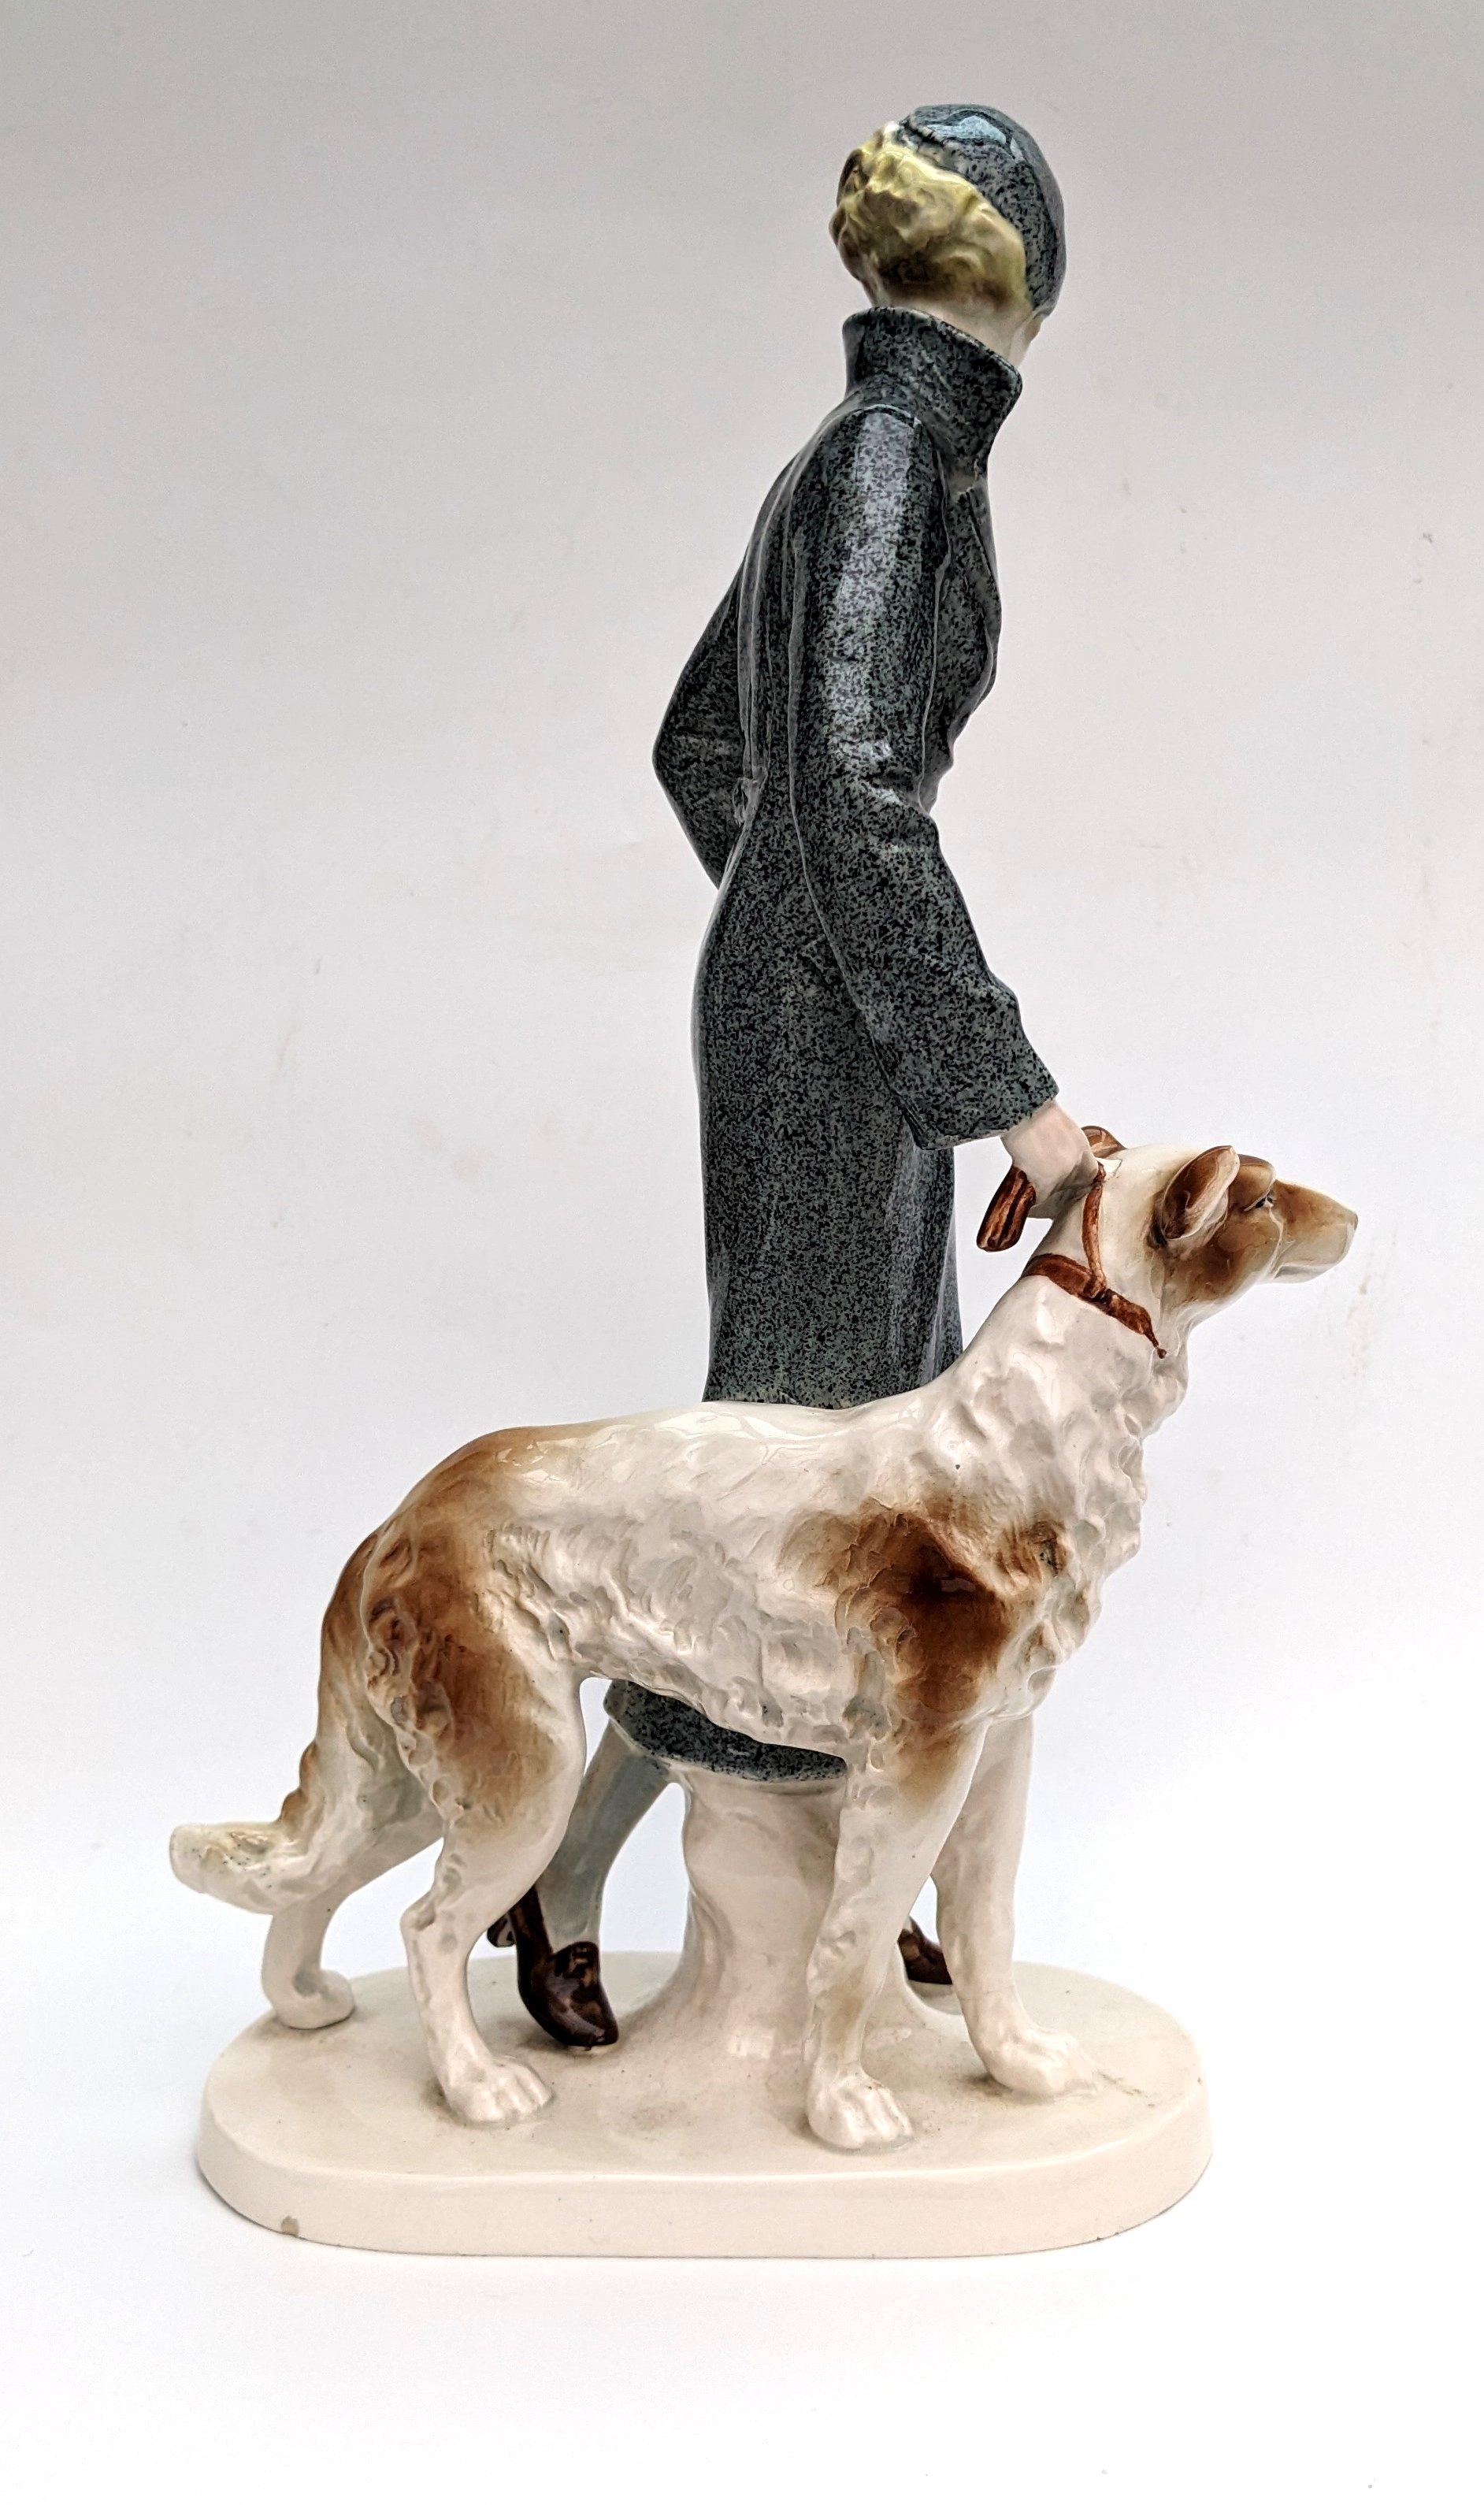 20th Century Art Deco Large Ceramic Figure & Dog, German, c1930 For Sale